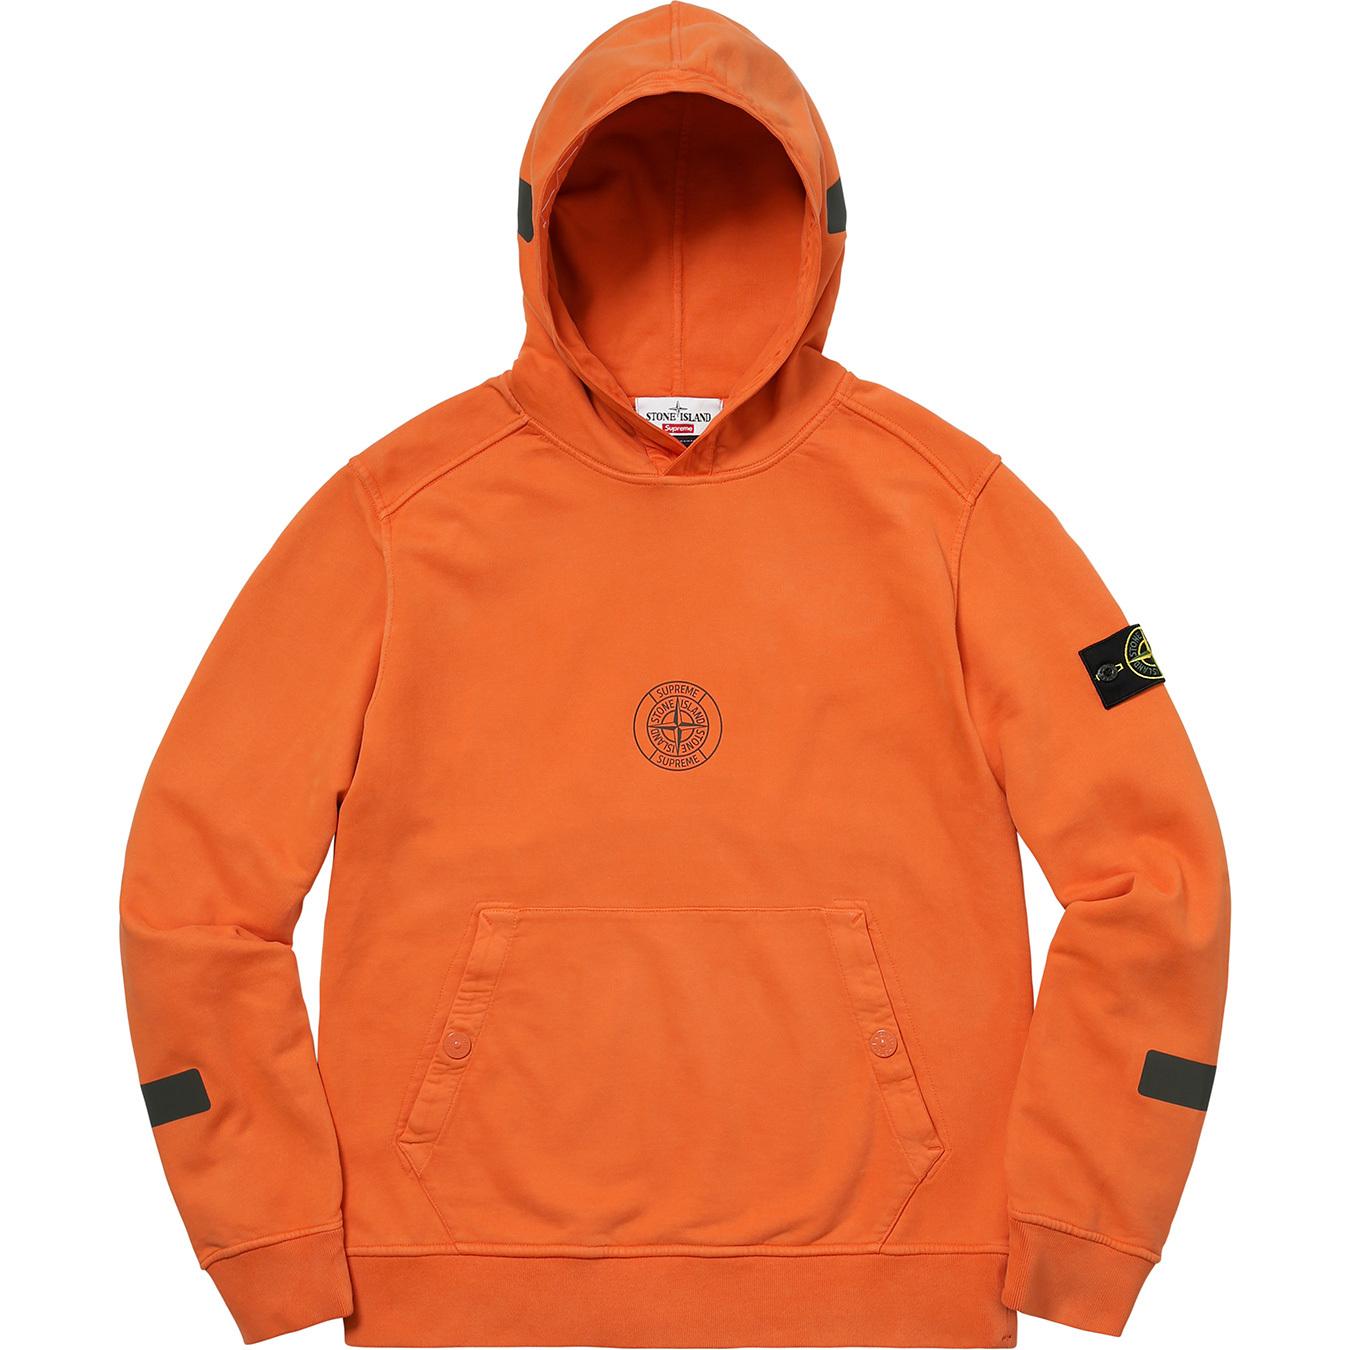 Supreme Stone Island Hooded Sweatshirt in Orange for Men - Lyst